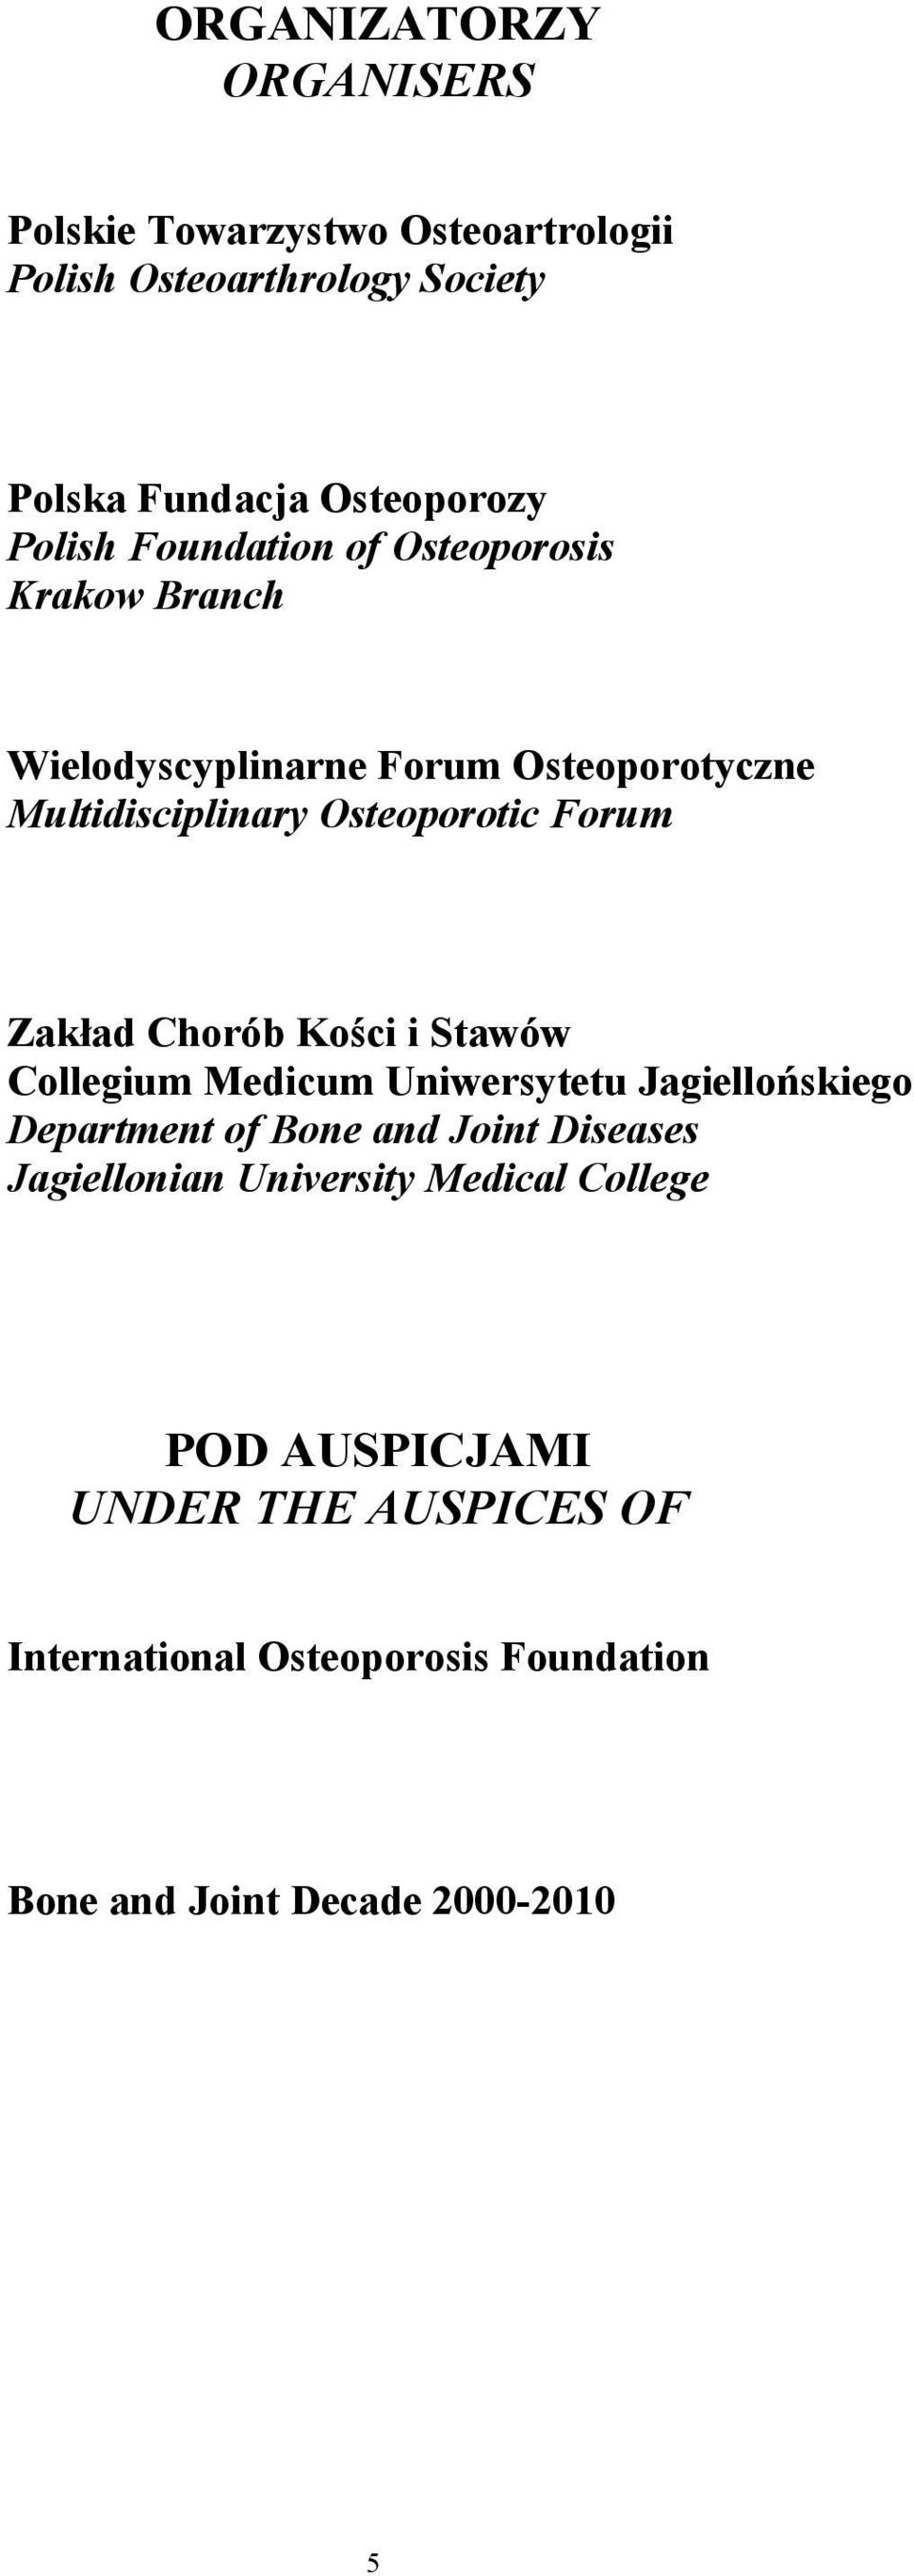 Chorób Kości i Stawów Collegium Medicum Uniwersytetu Jagiellońskiego Department of Bone and Joint Diseases Jagiellonian